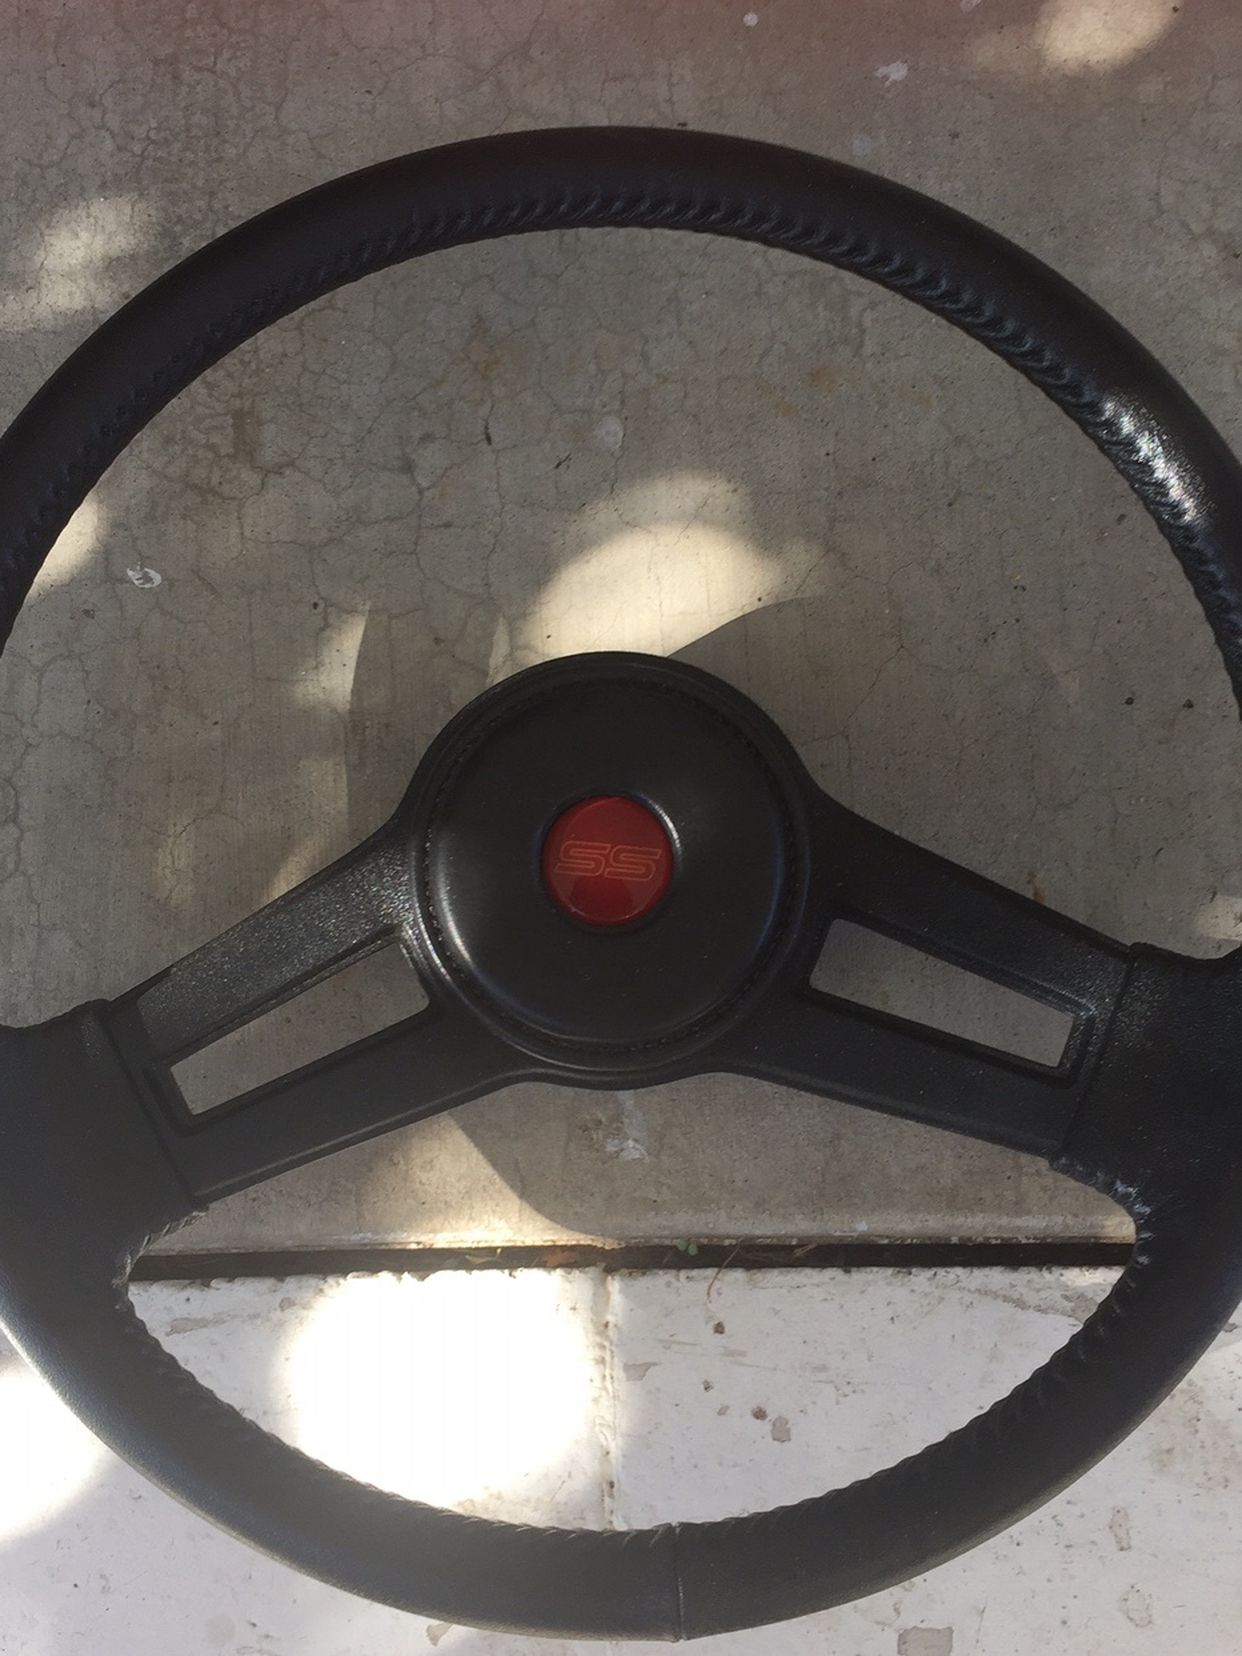 Monte Carlo SS steering wheel